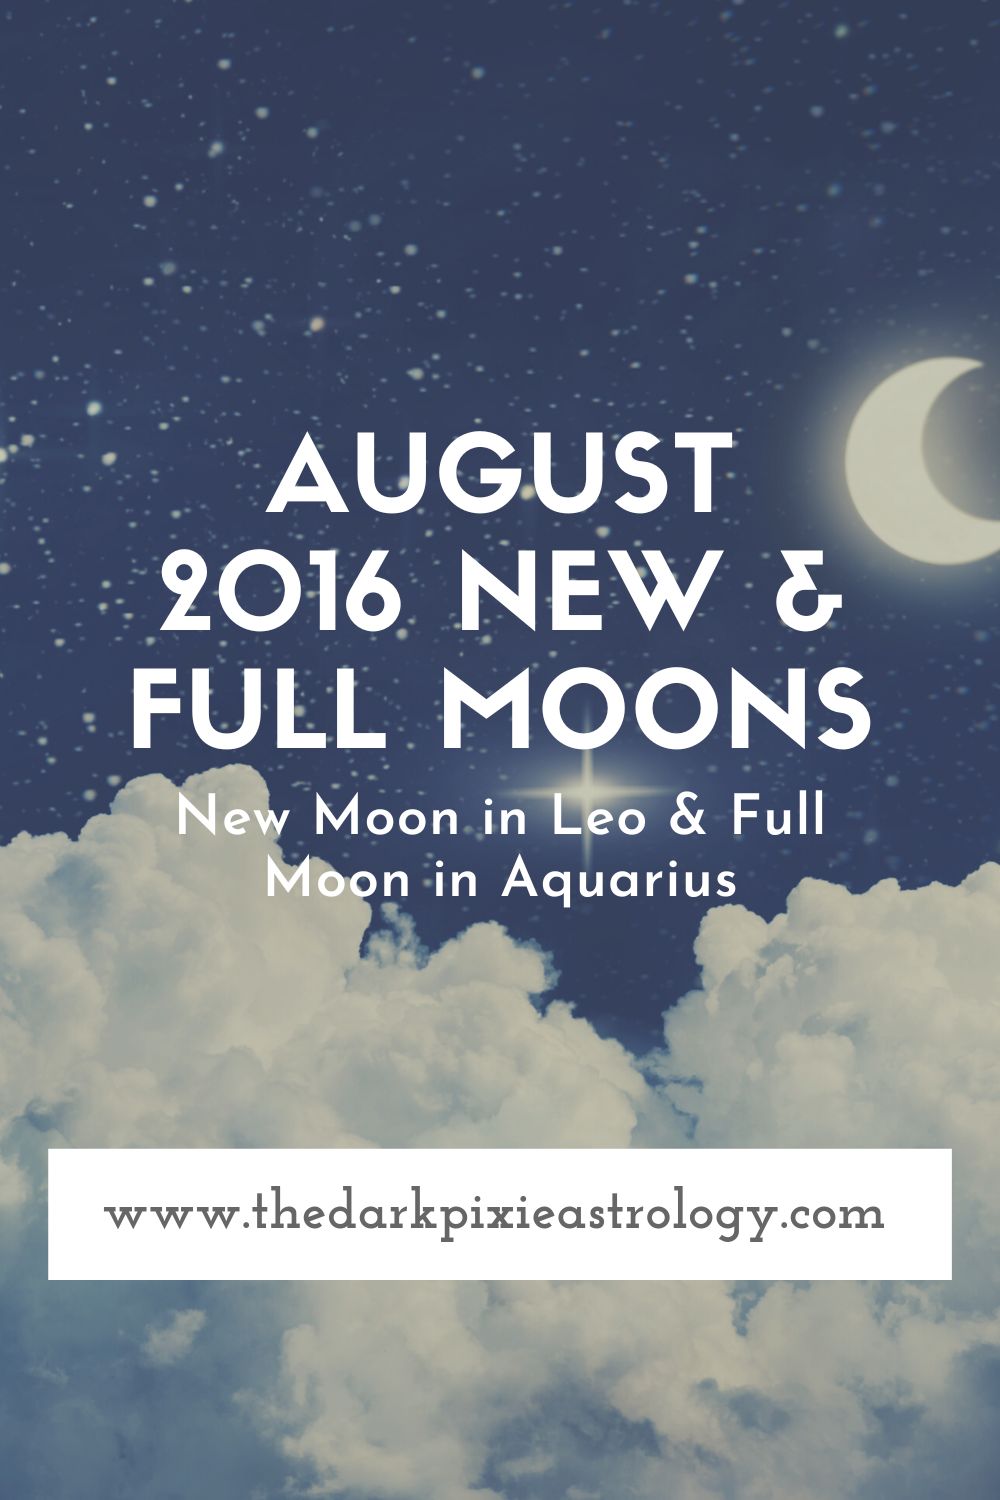 August 2016 New & Full Moons - The Dark Pixie Astrology